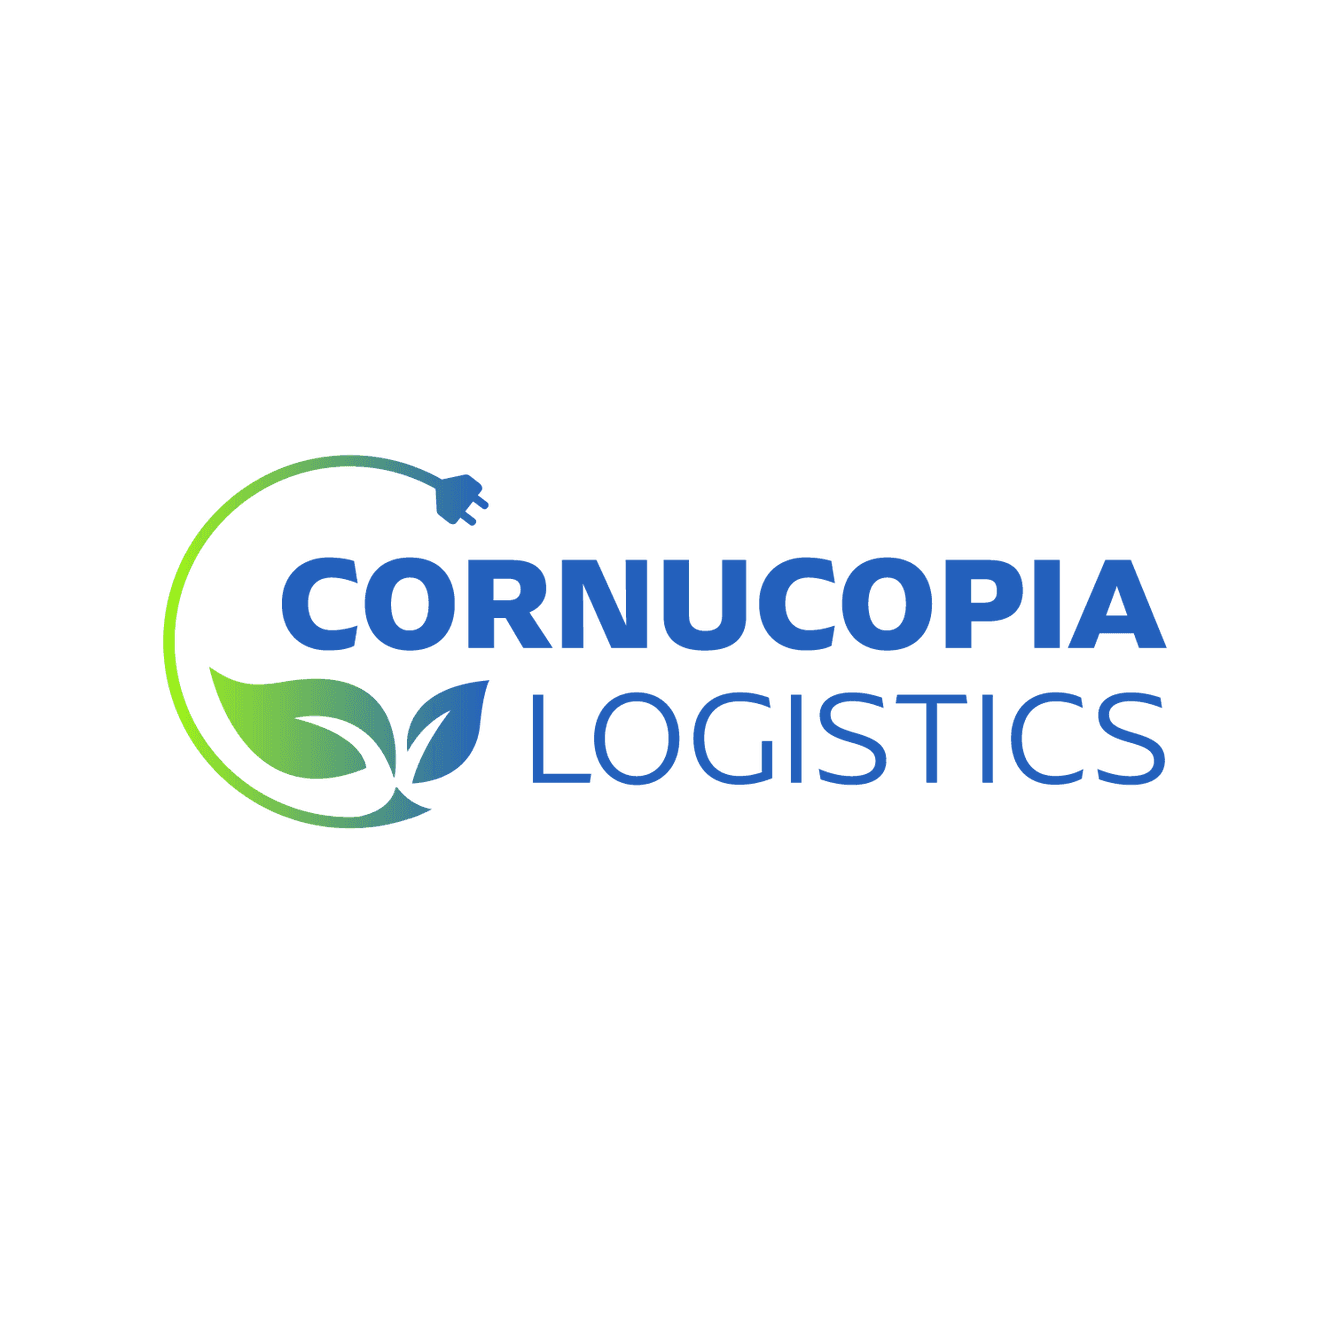 Product Our Services | Cornucopia image